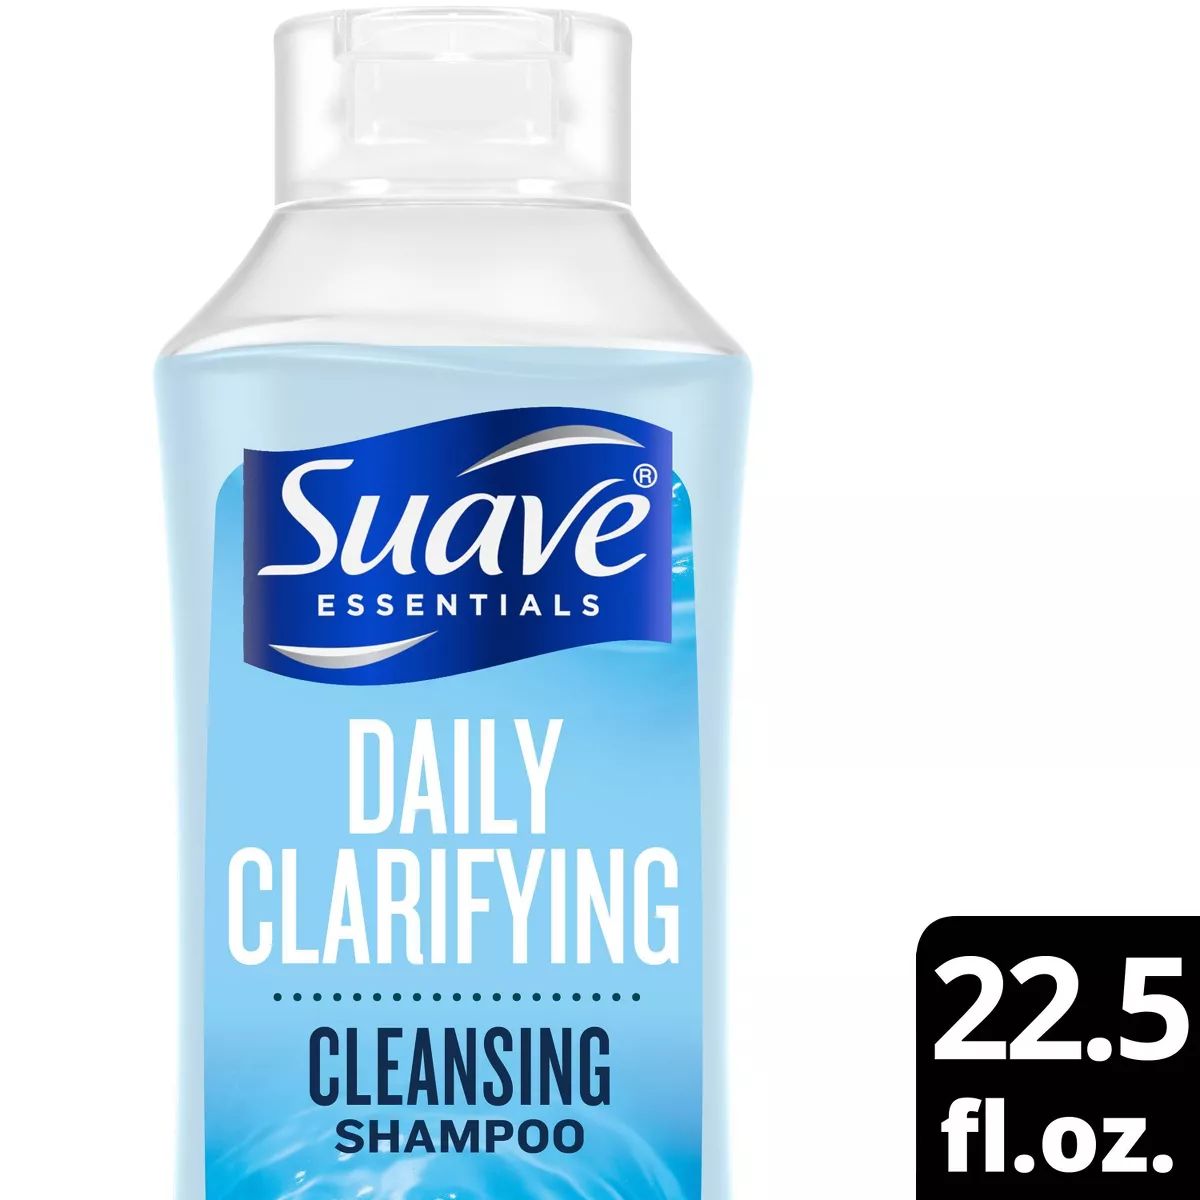 Suave Cleansing Shampoo Daily Clarifying - 22.5 fl oz | Target